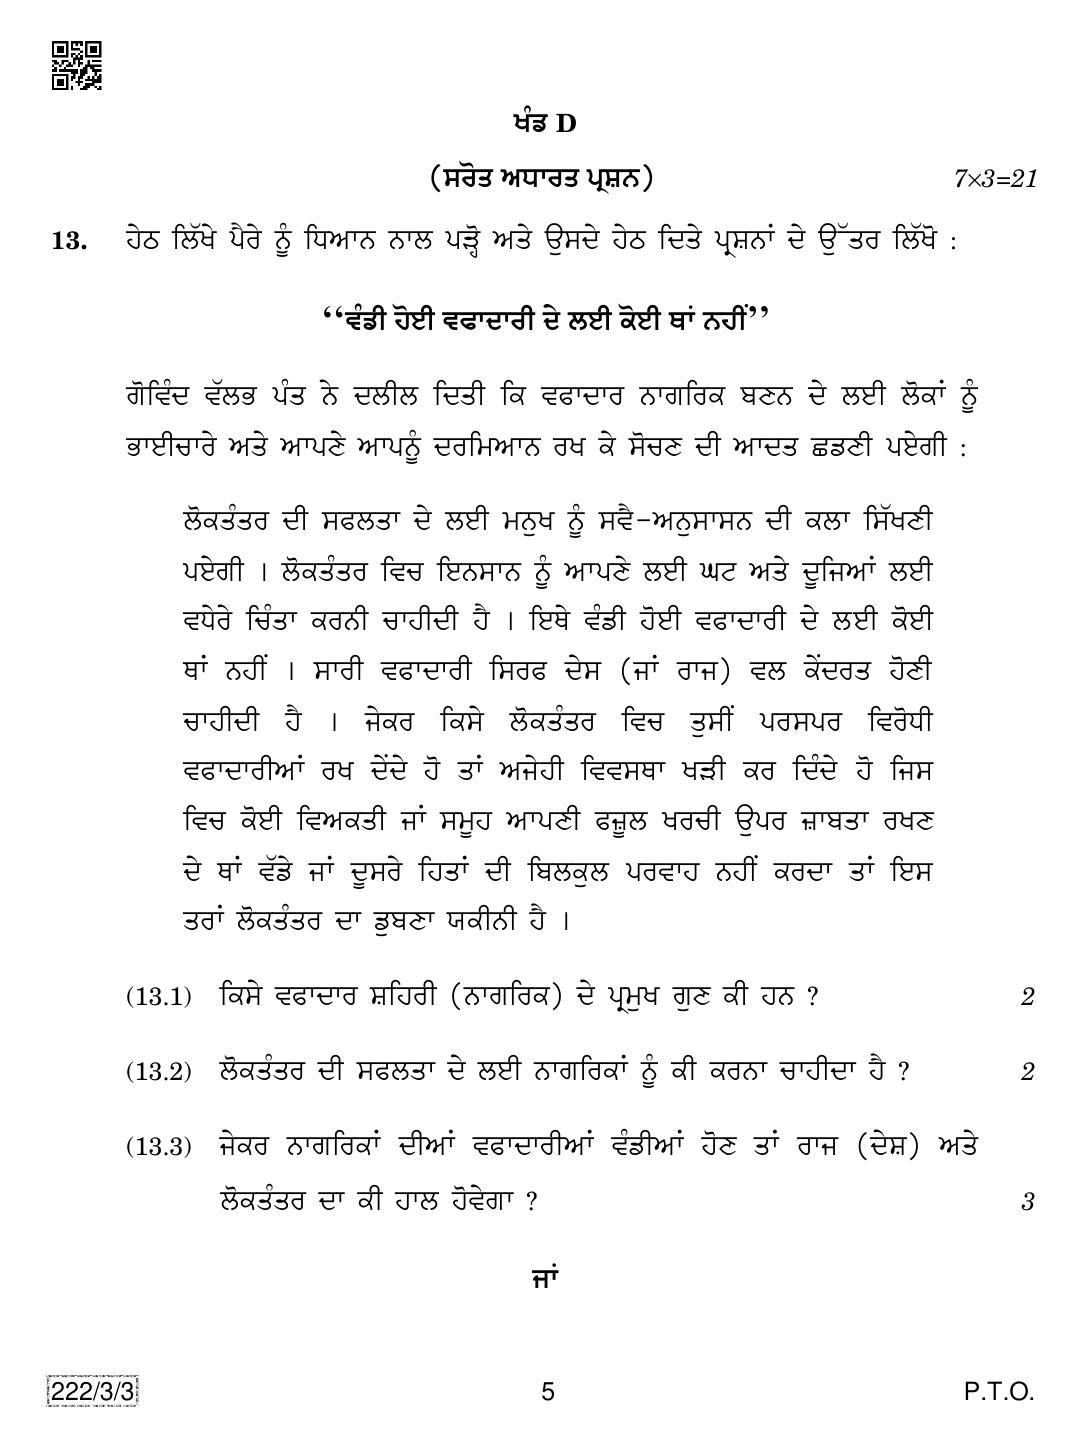 CBSE Class 12 222-3-3 Hiastory (Punjabi) 2019 Question Paper - Page 5